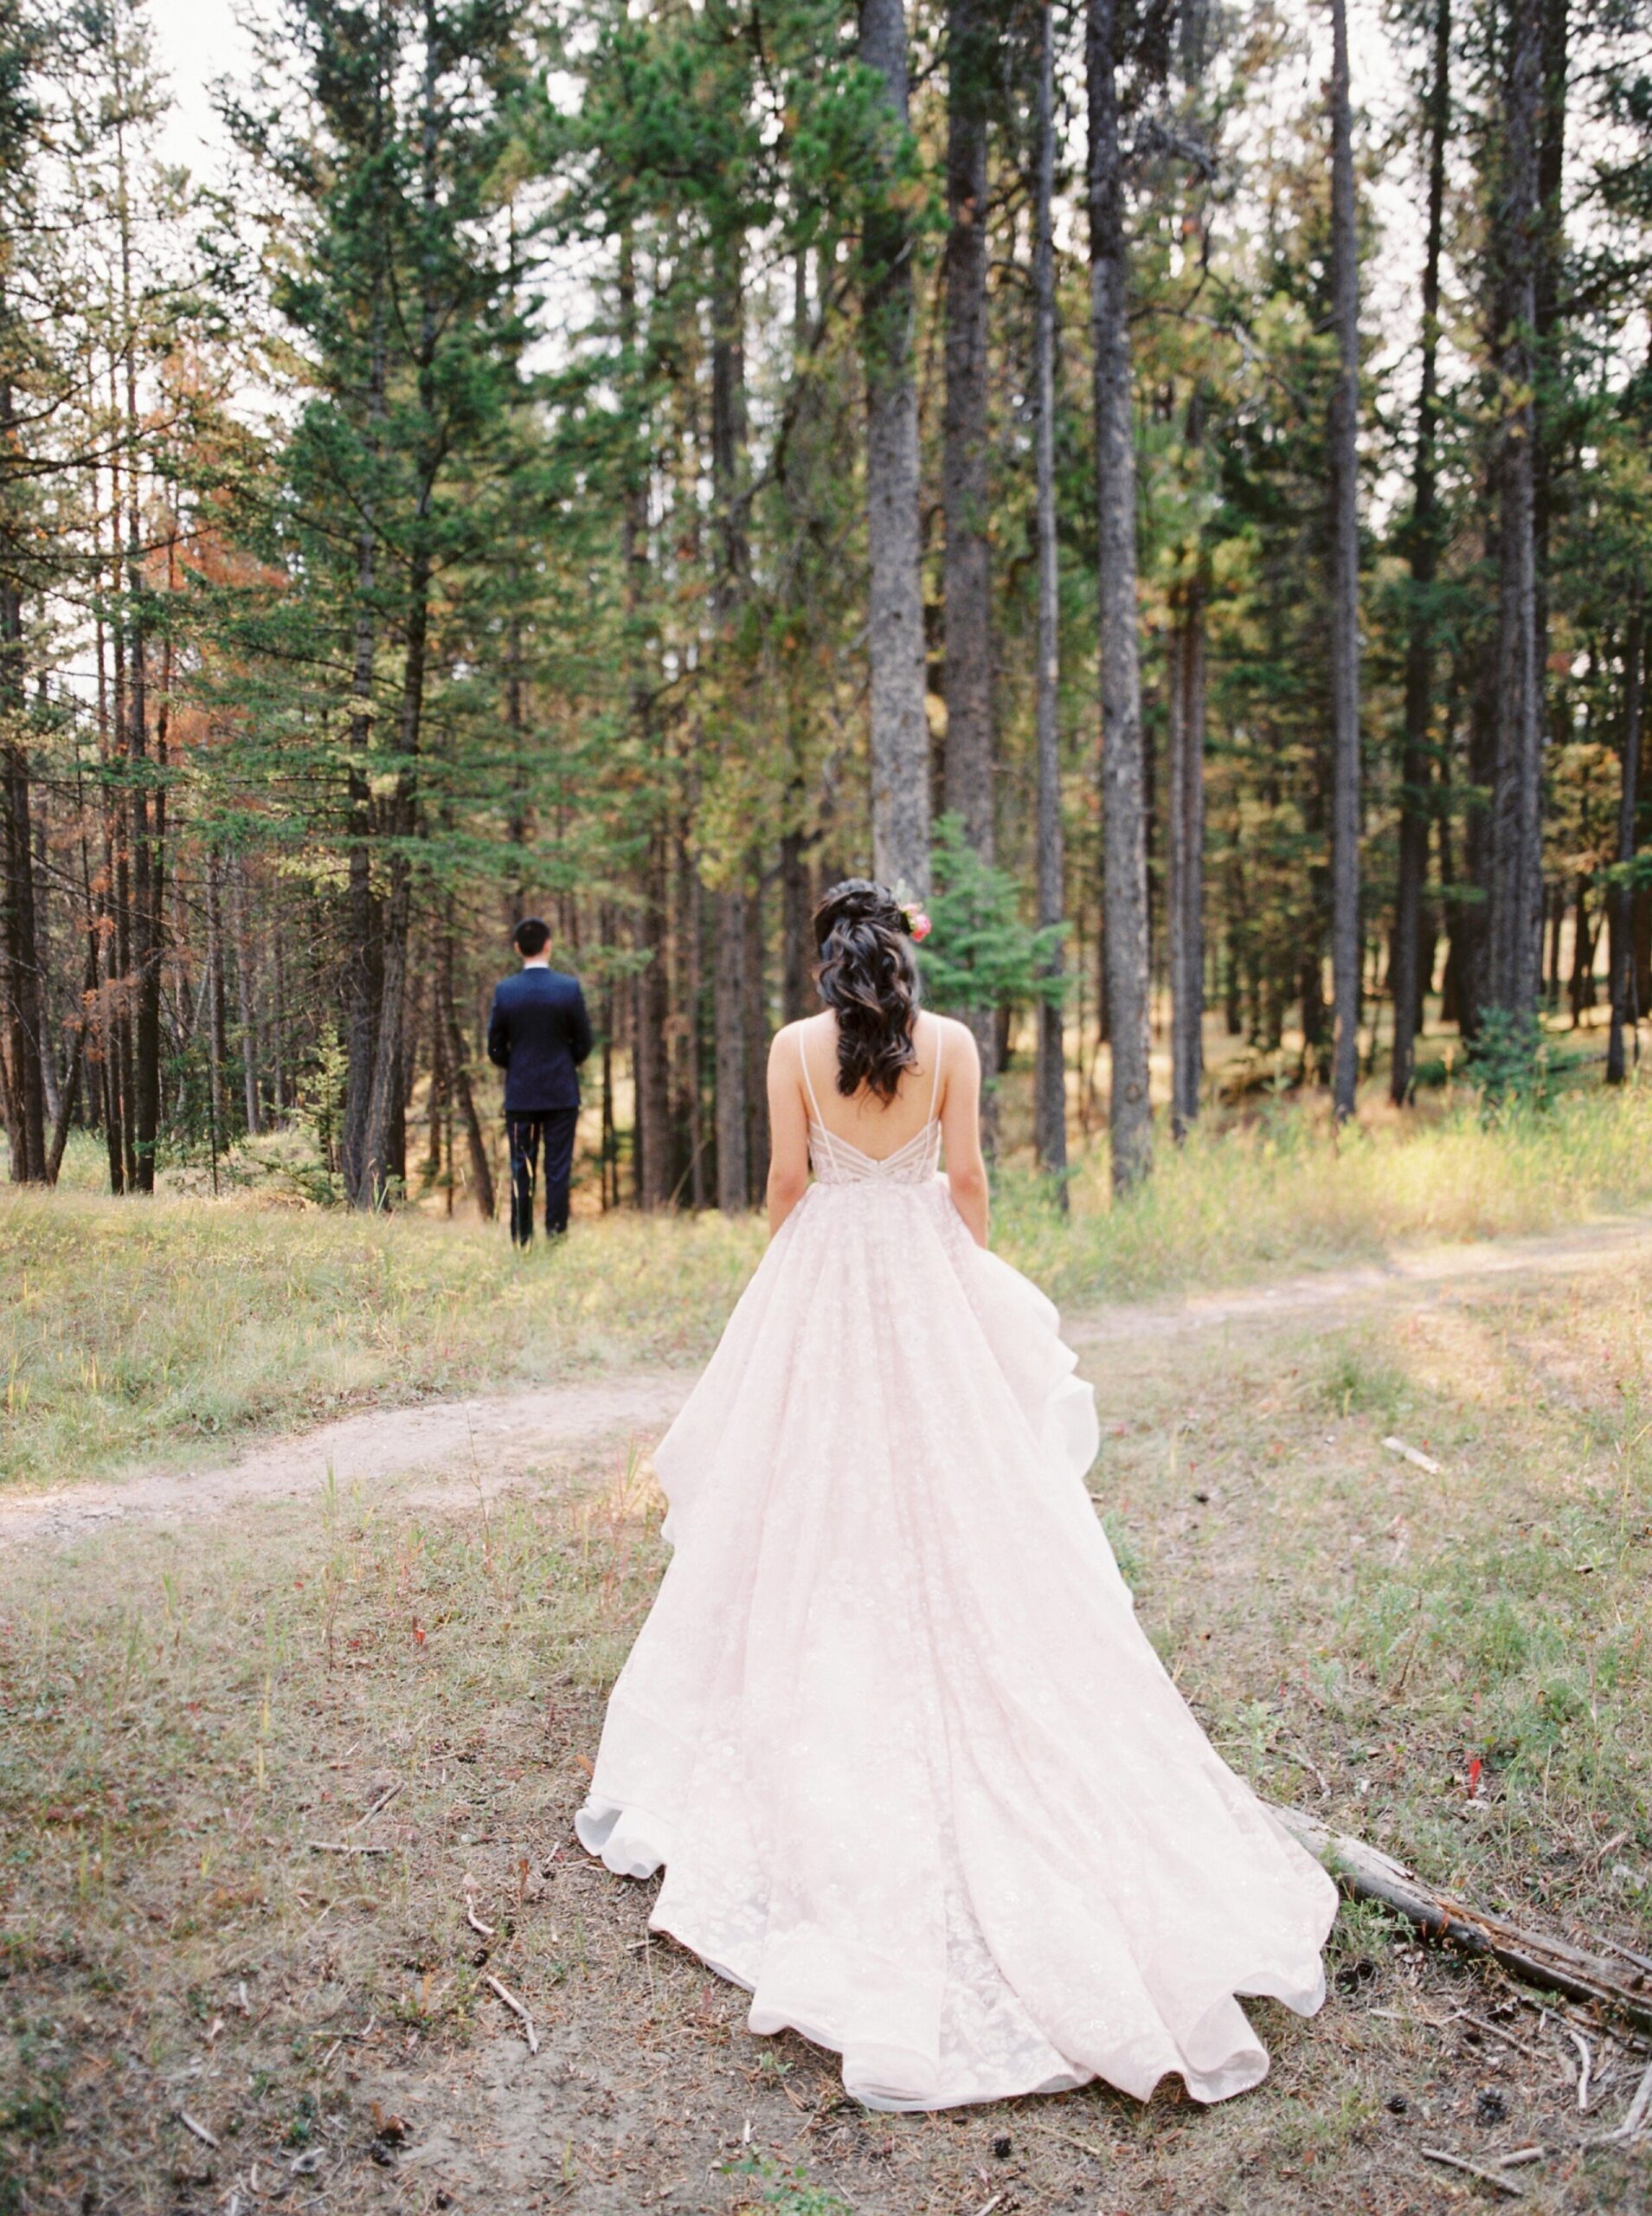  Banff wedding photographer | intimate wedding elopement | first look | Justine milton photography 